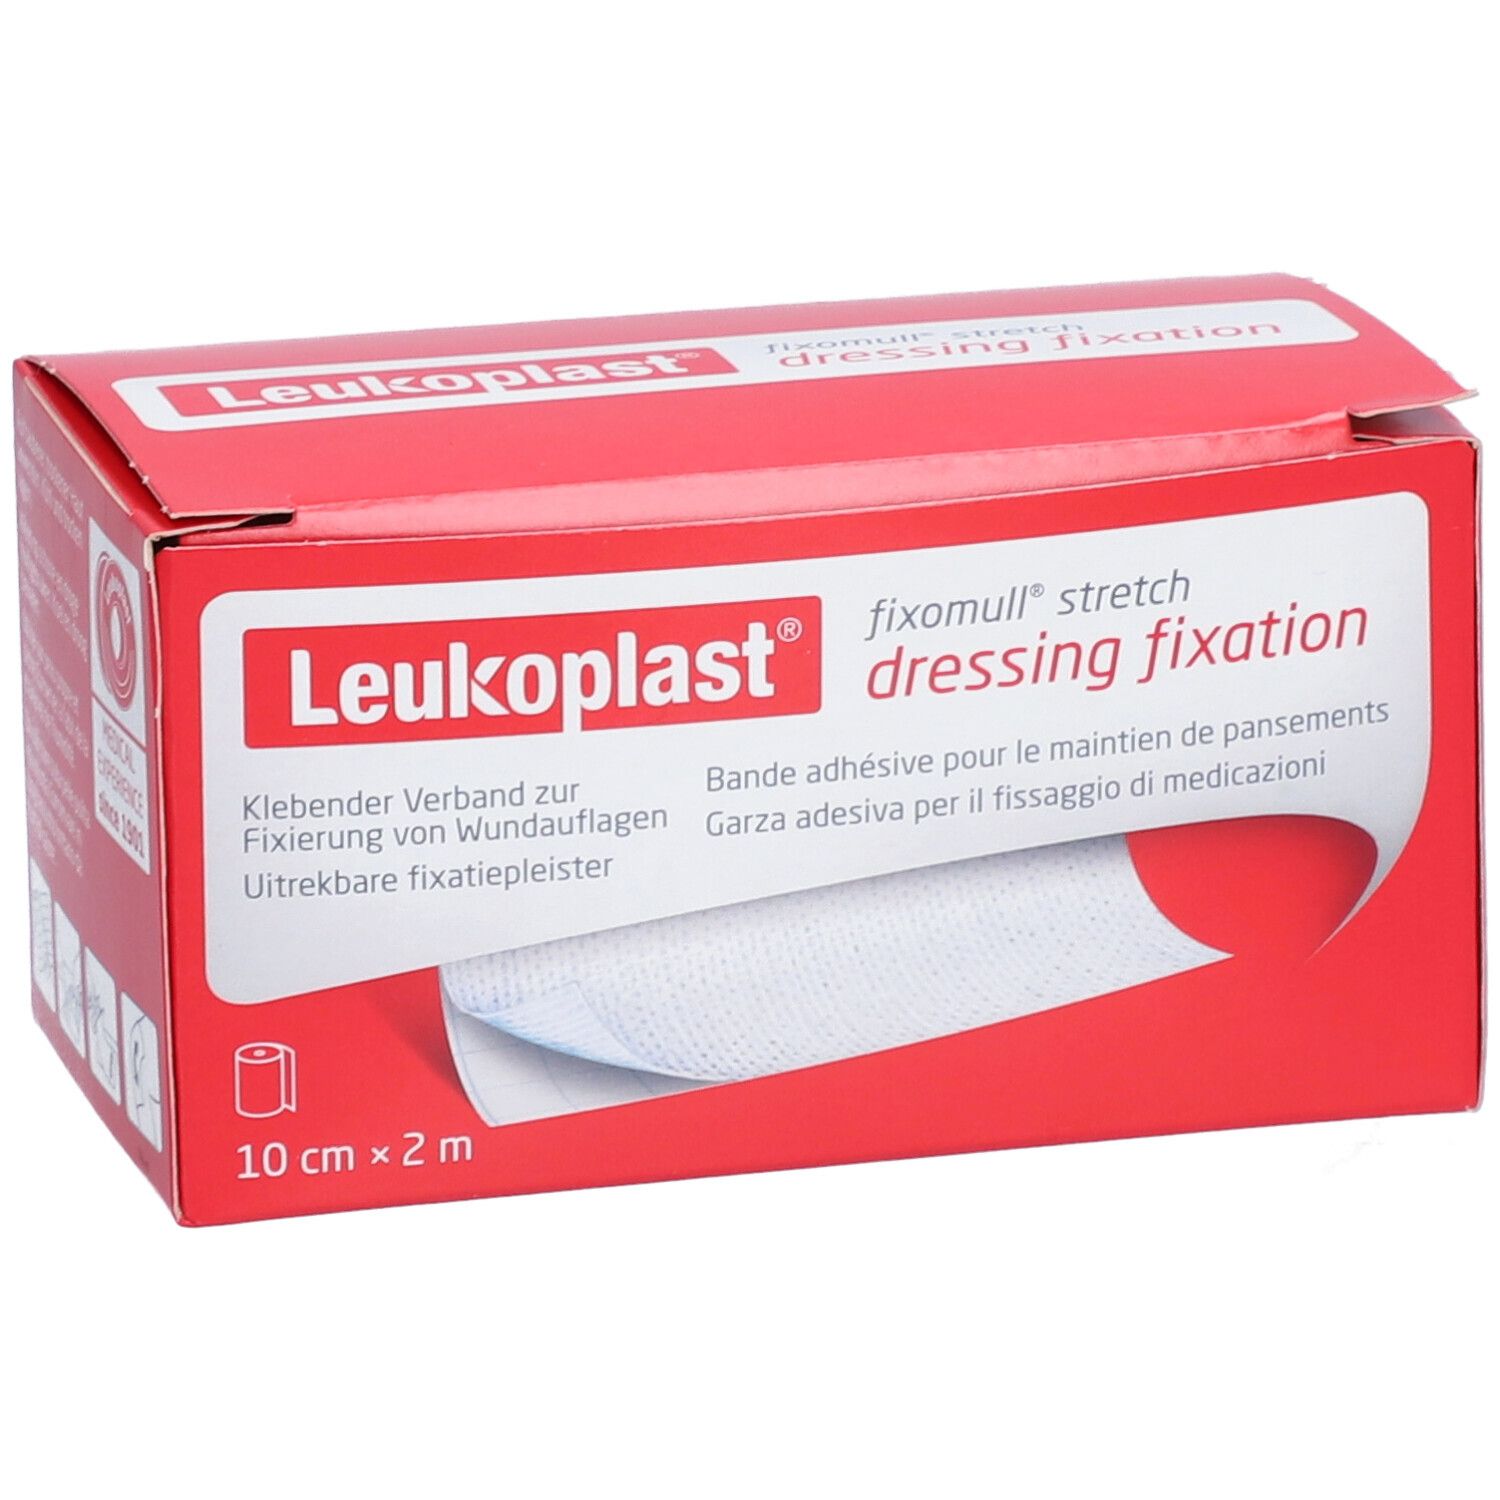 Leukoplast® fixomull stretch